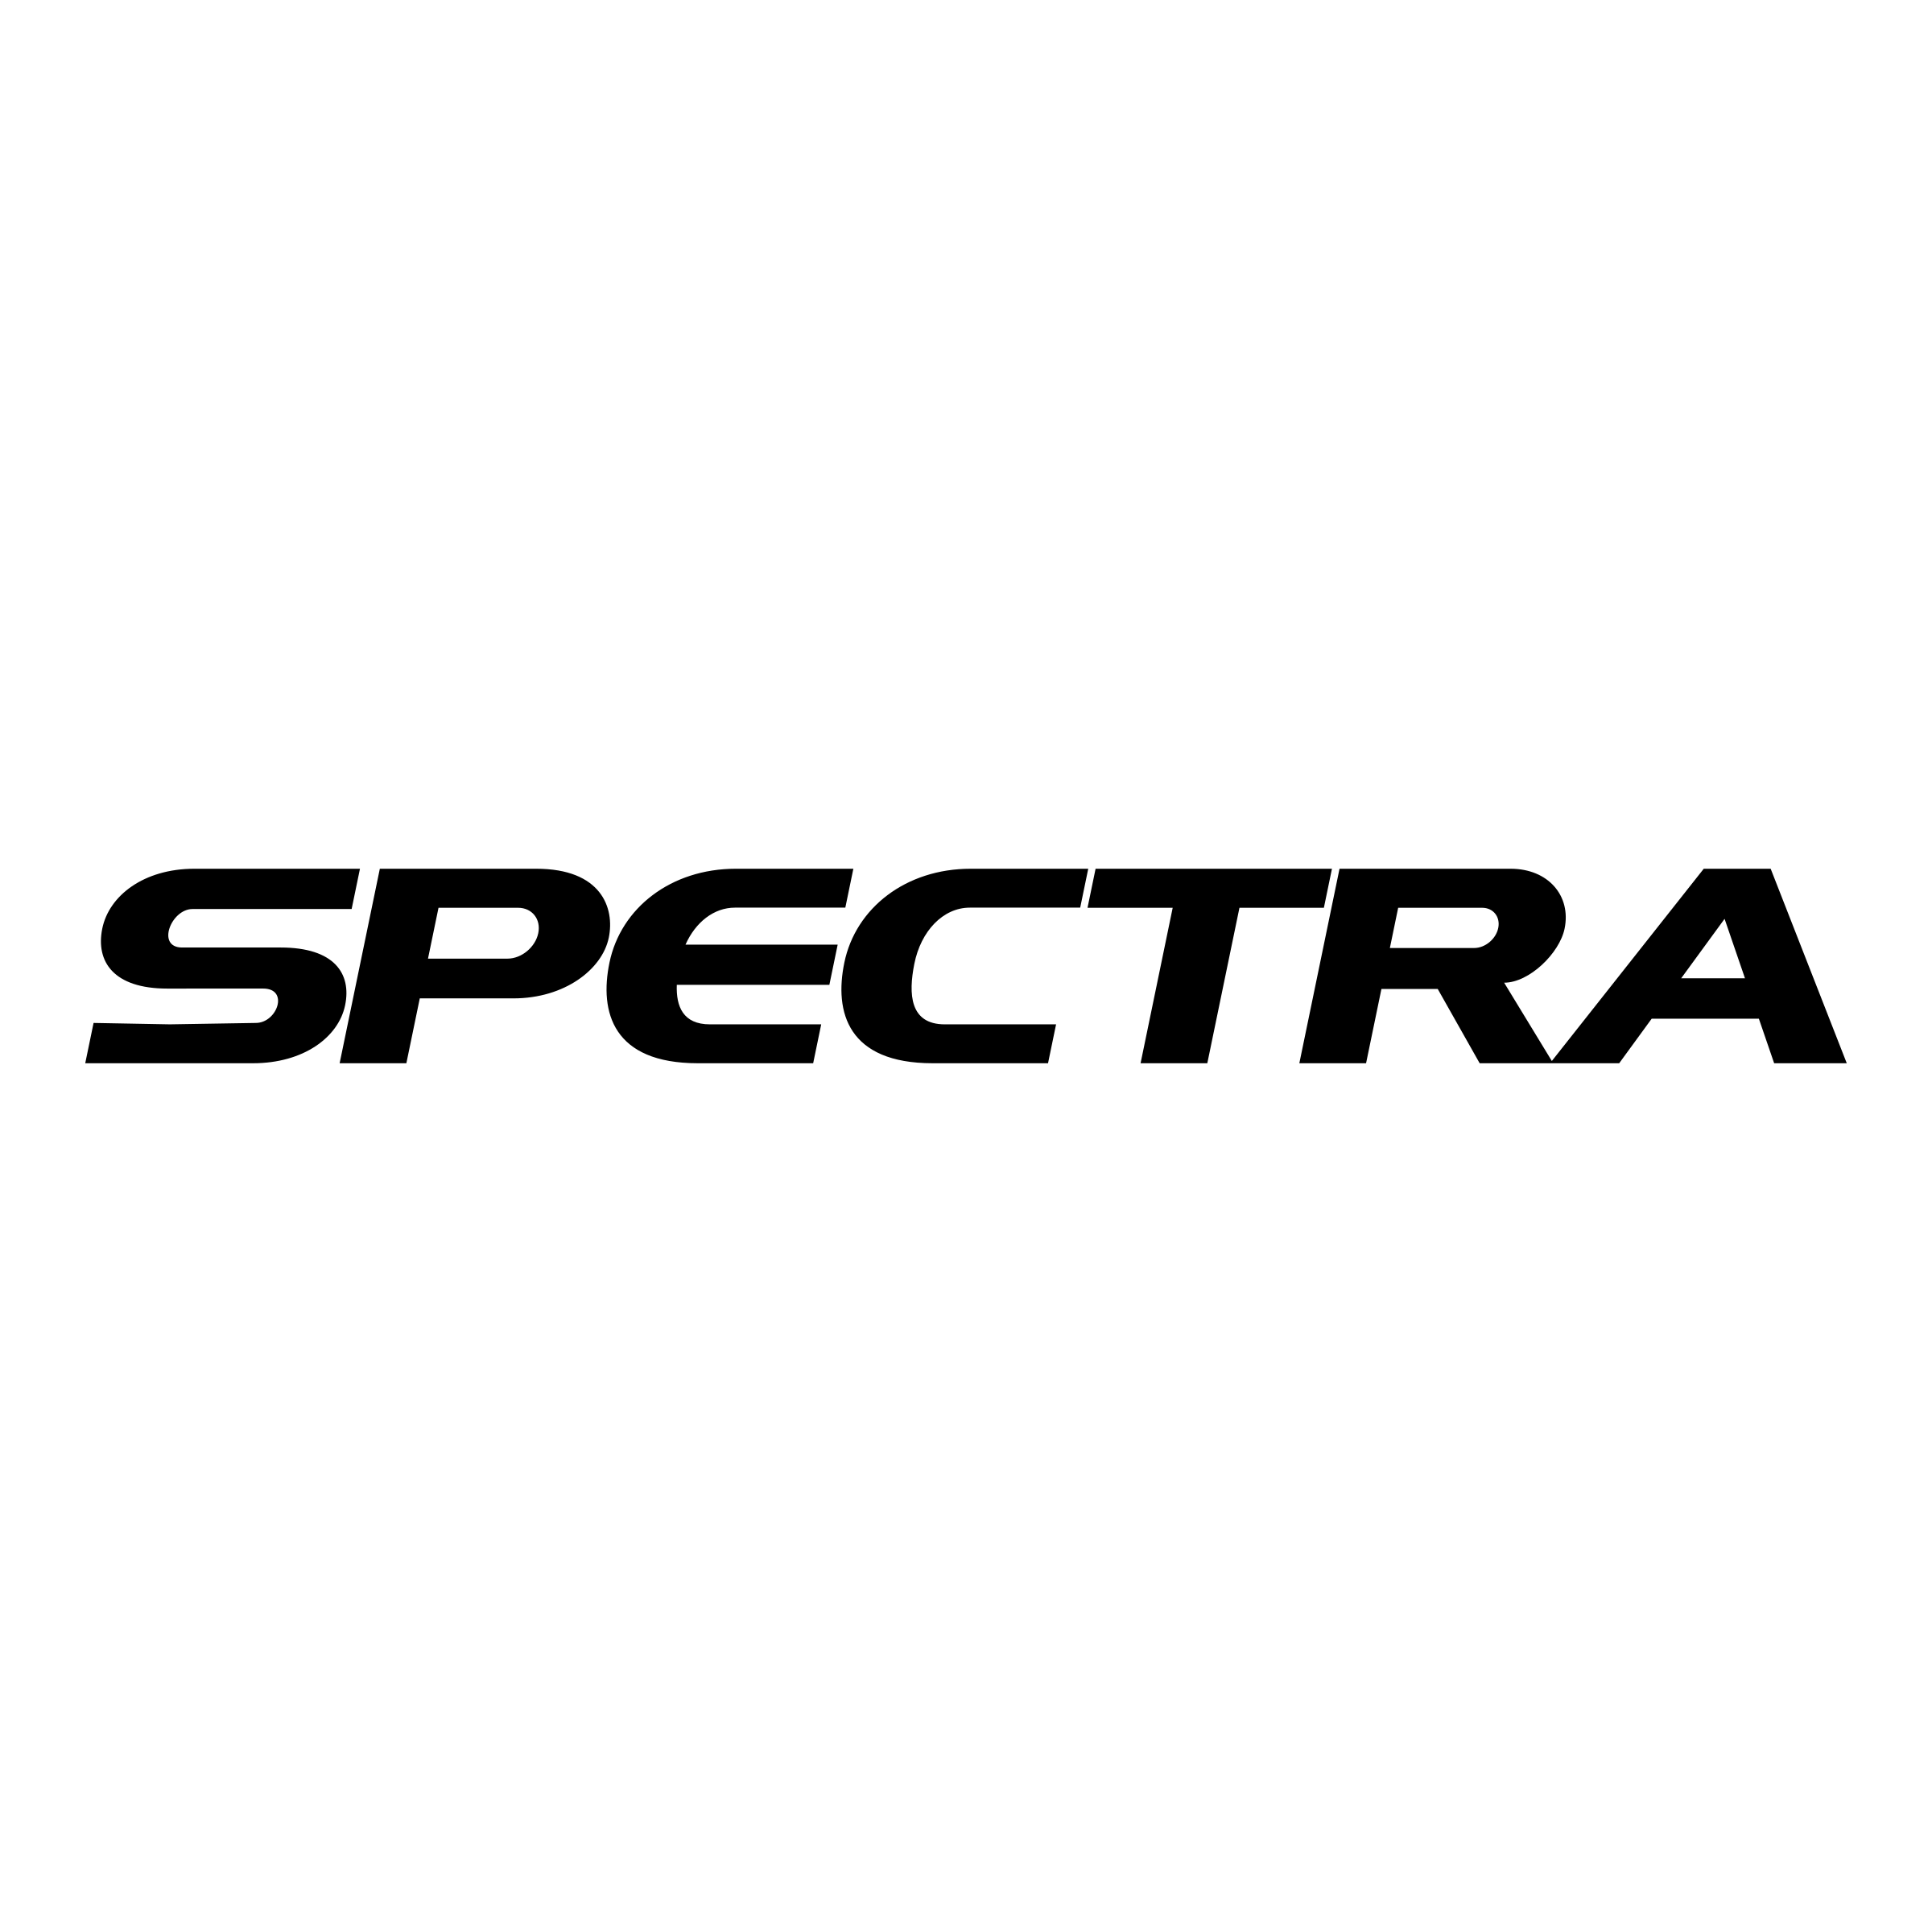 Spectra Logo - Spectra Logo PNG Transparent & SVG Vector - Freebie Supply